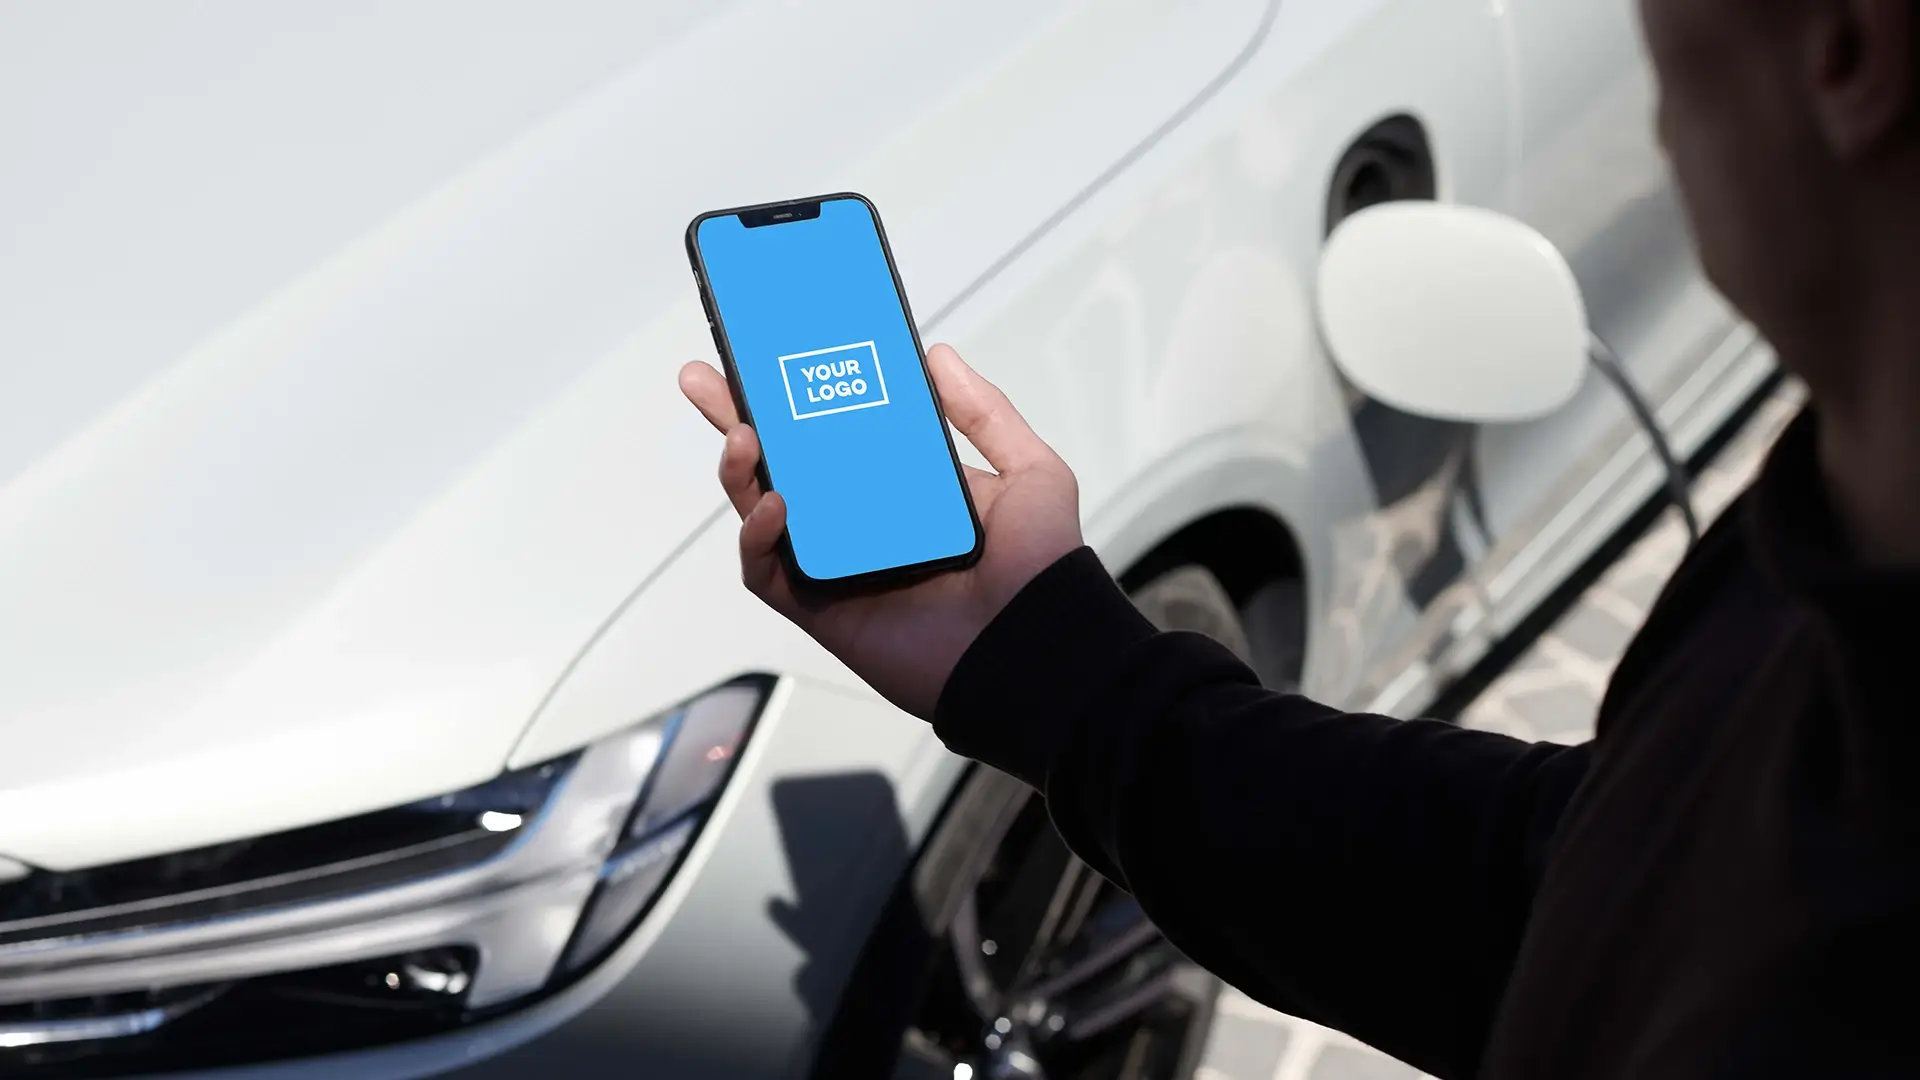 Smartphone EV charging app screen car background